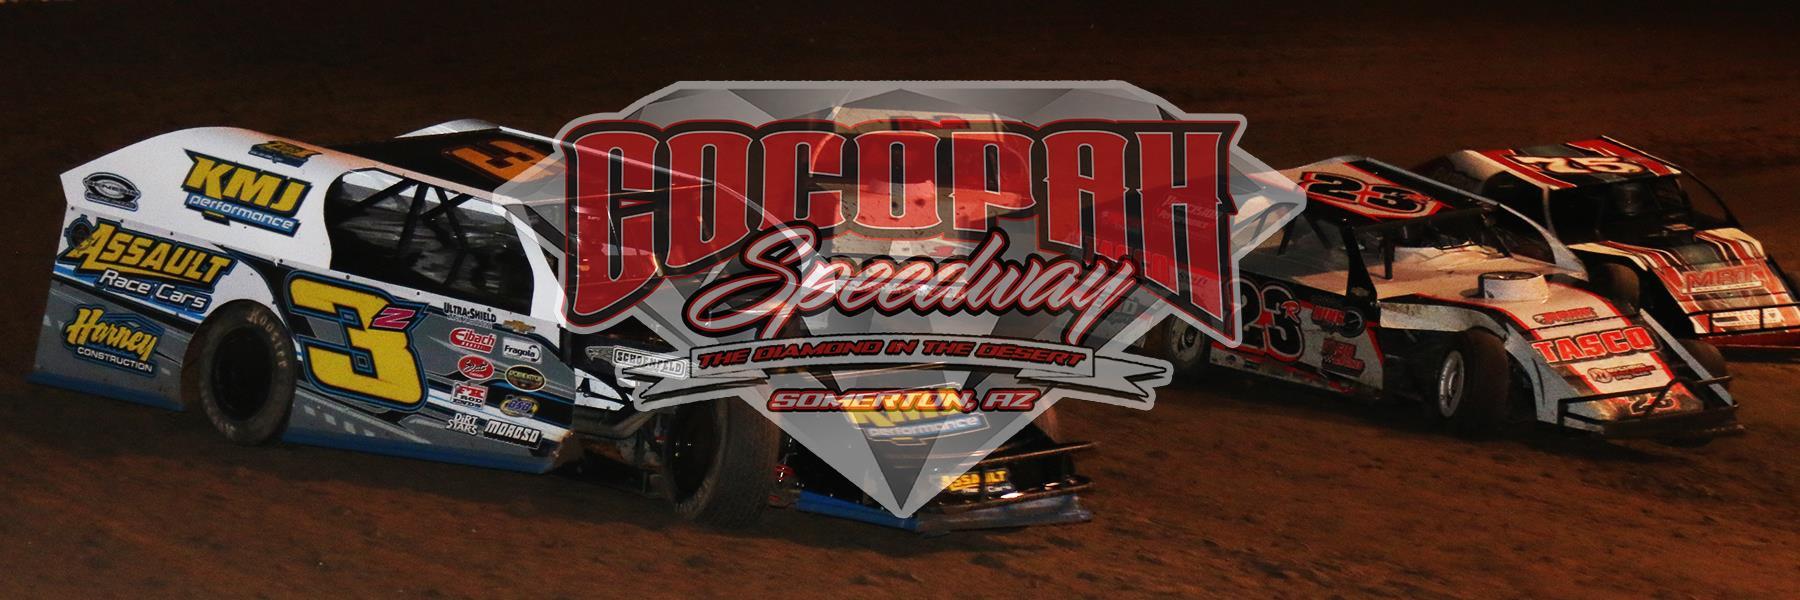 1/12/2023 - Cocopah Speedway